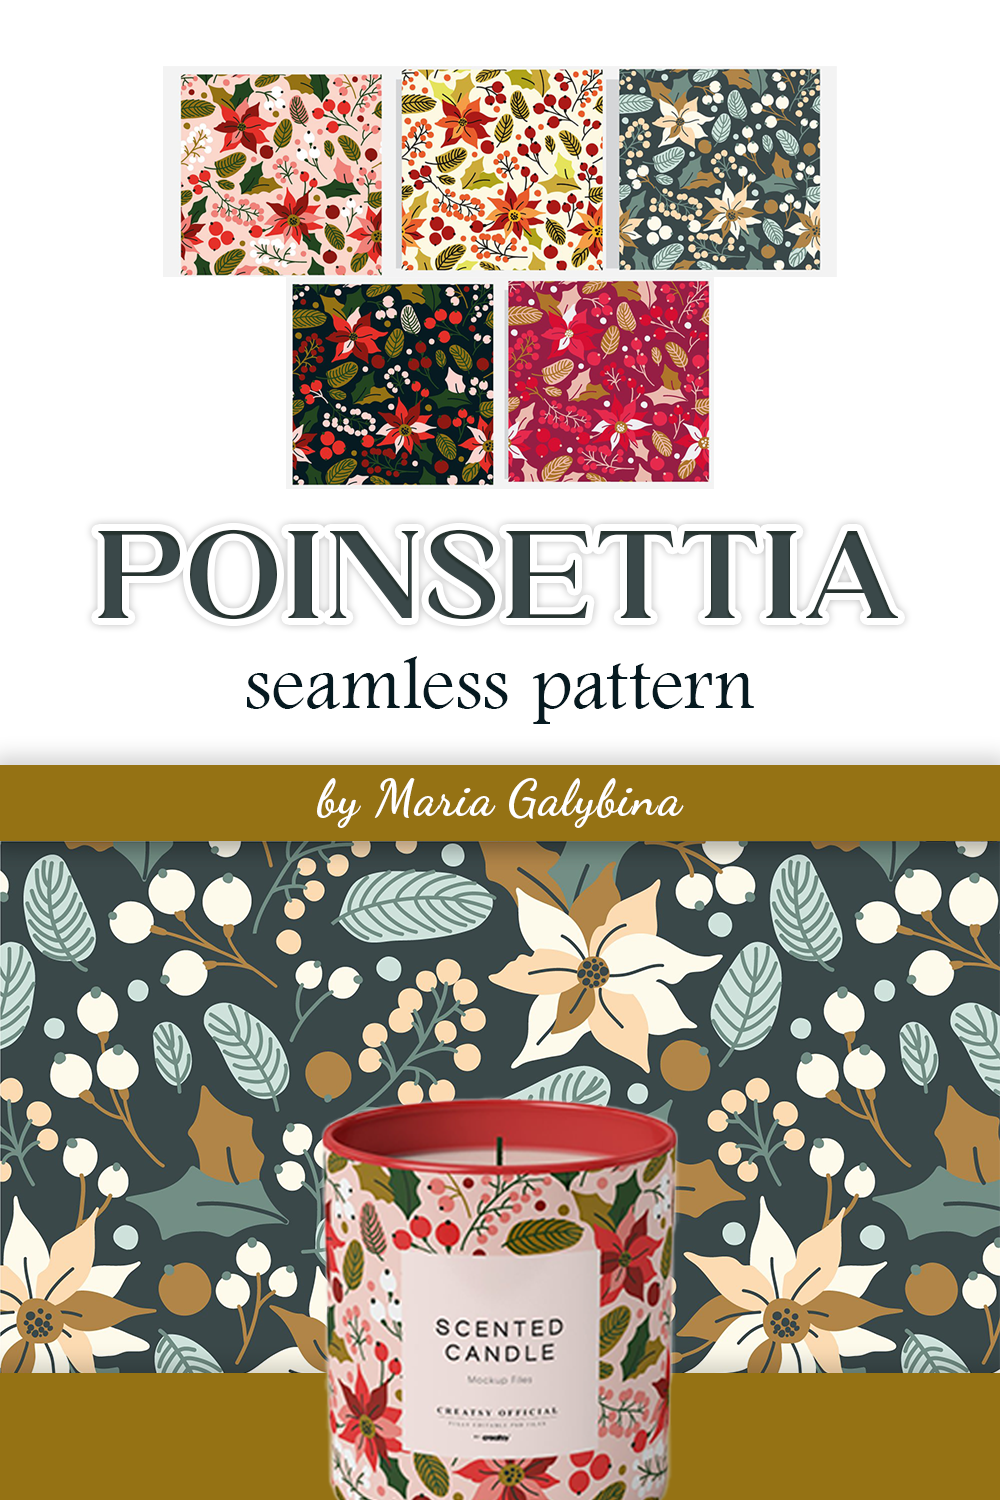 Poinsettia seamless pattern of pinterest.